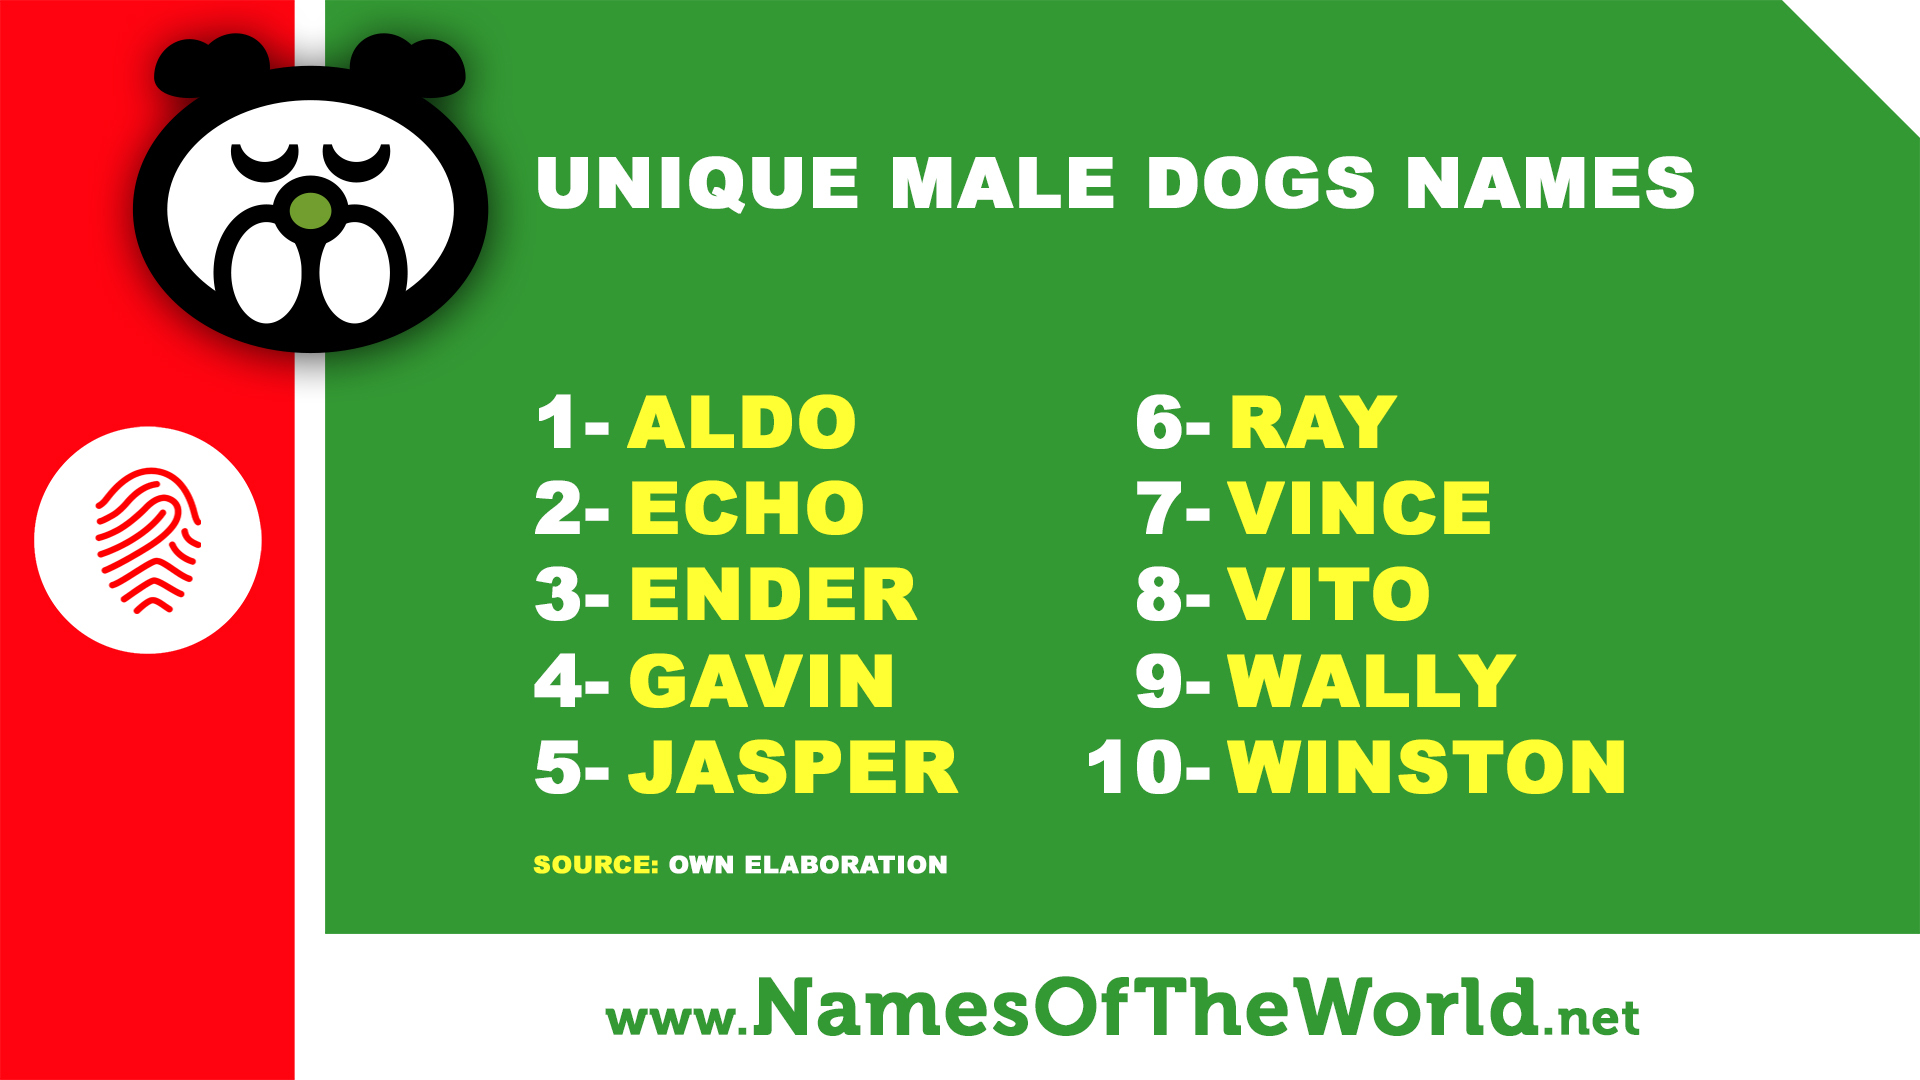 10 unique male dogs names